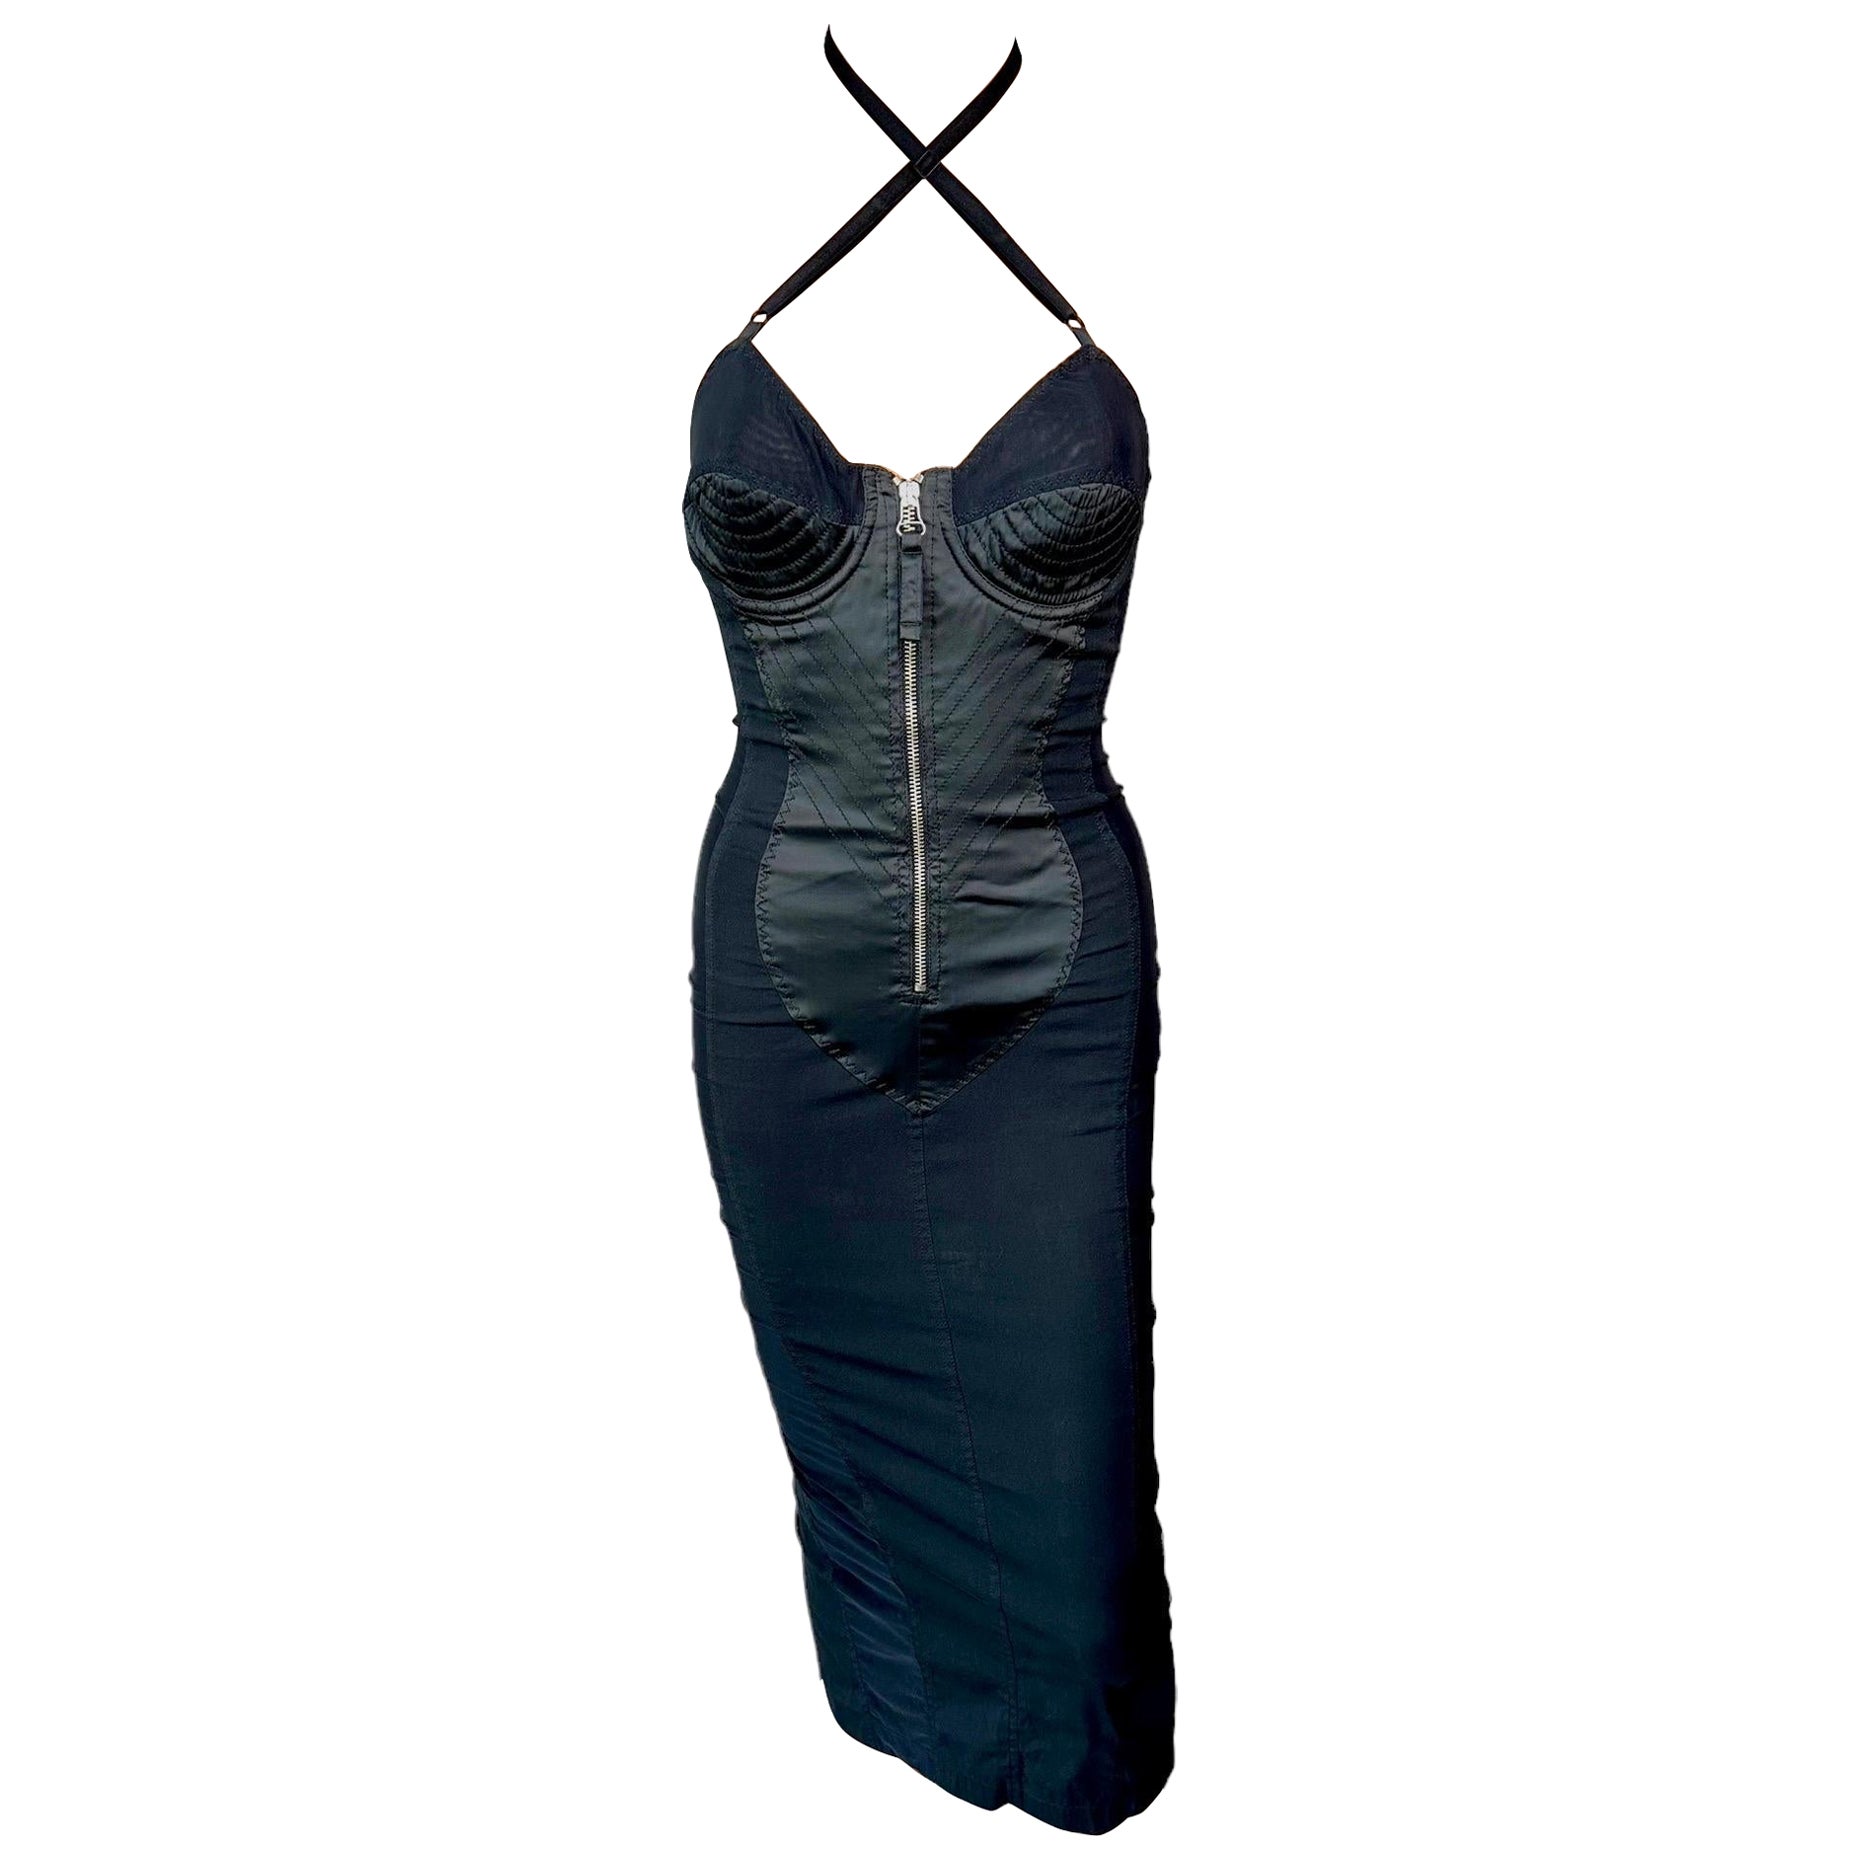 Jean Paul Gaultier 1990's Vintage Cone Bra Corset Bondage Black Evening Dress For Sale